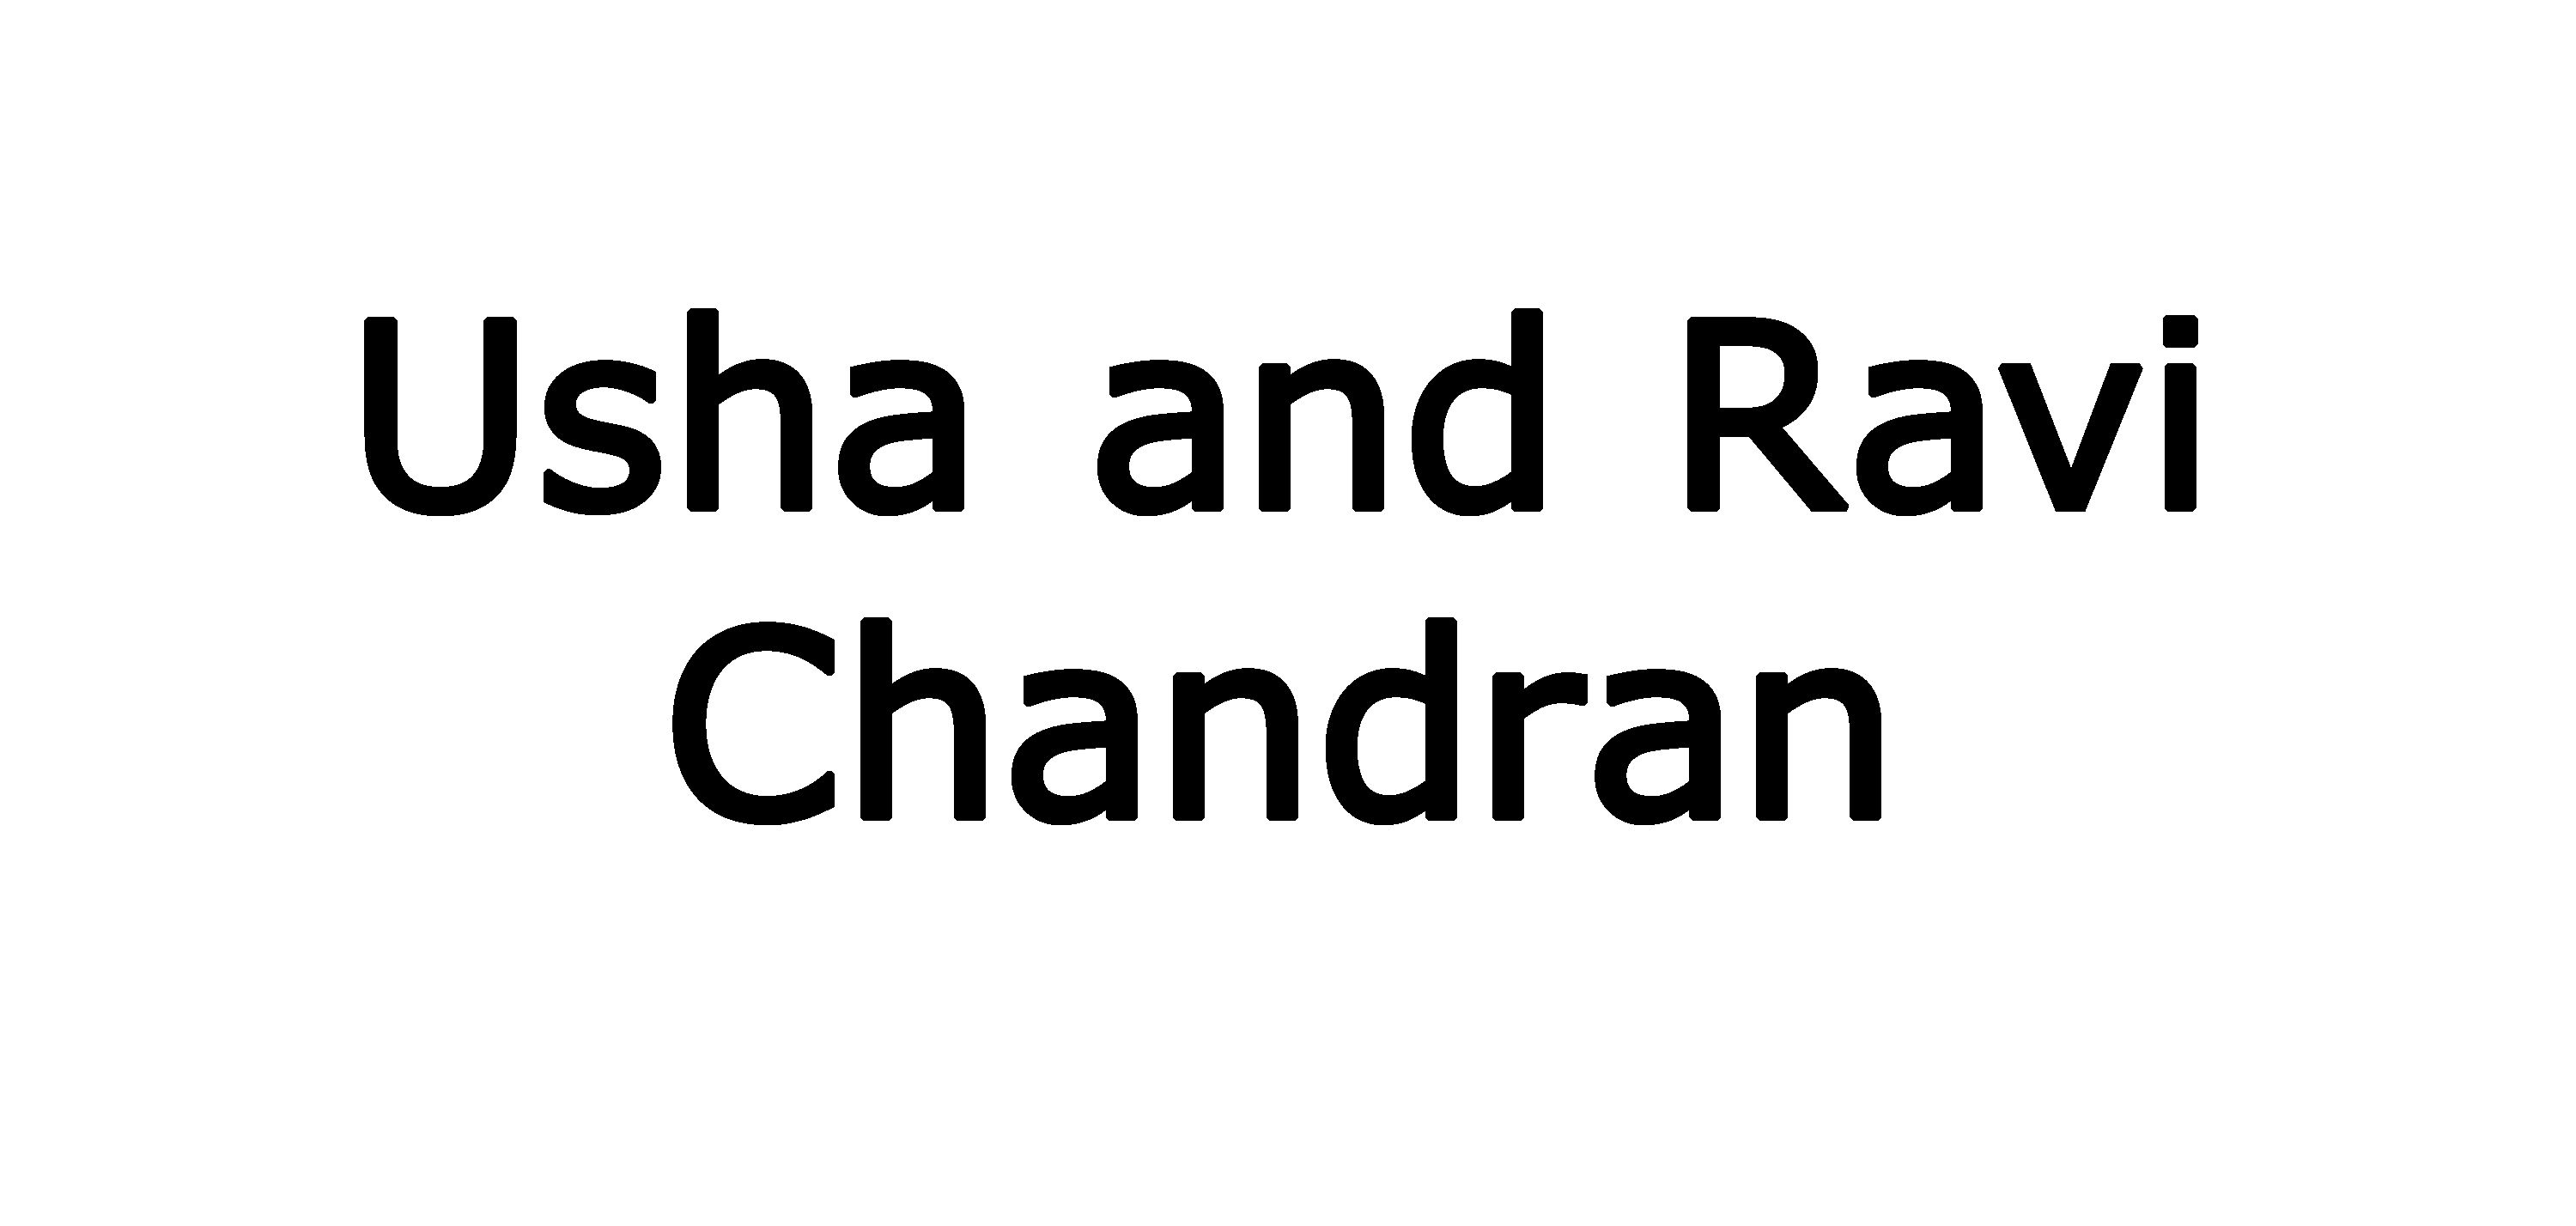 Usha and Ravi Chandran